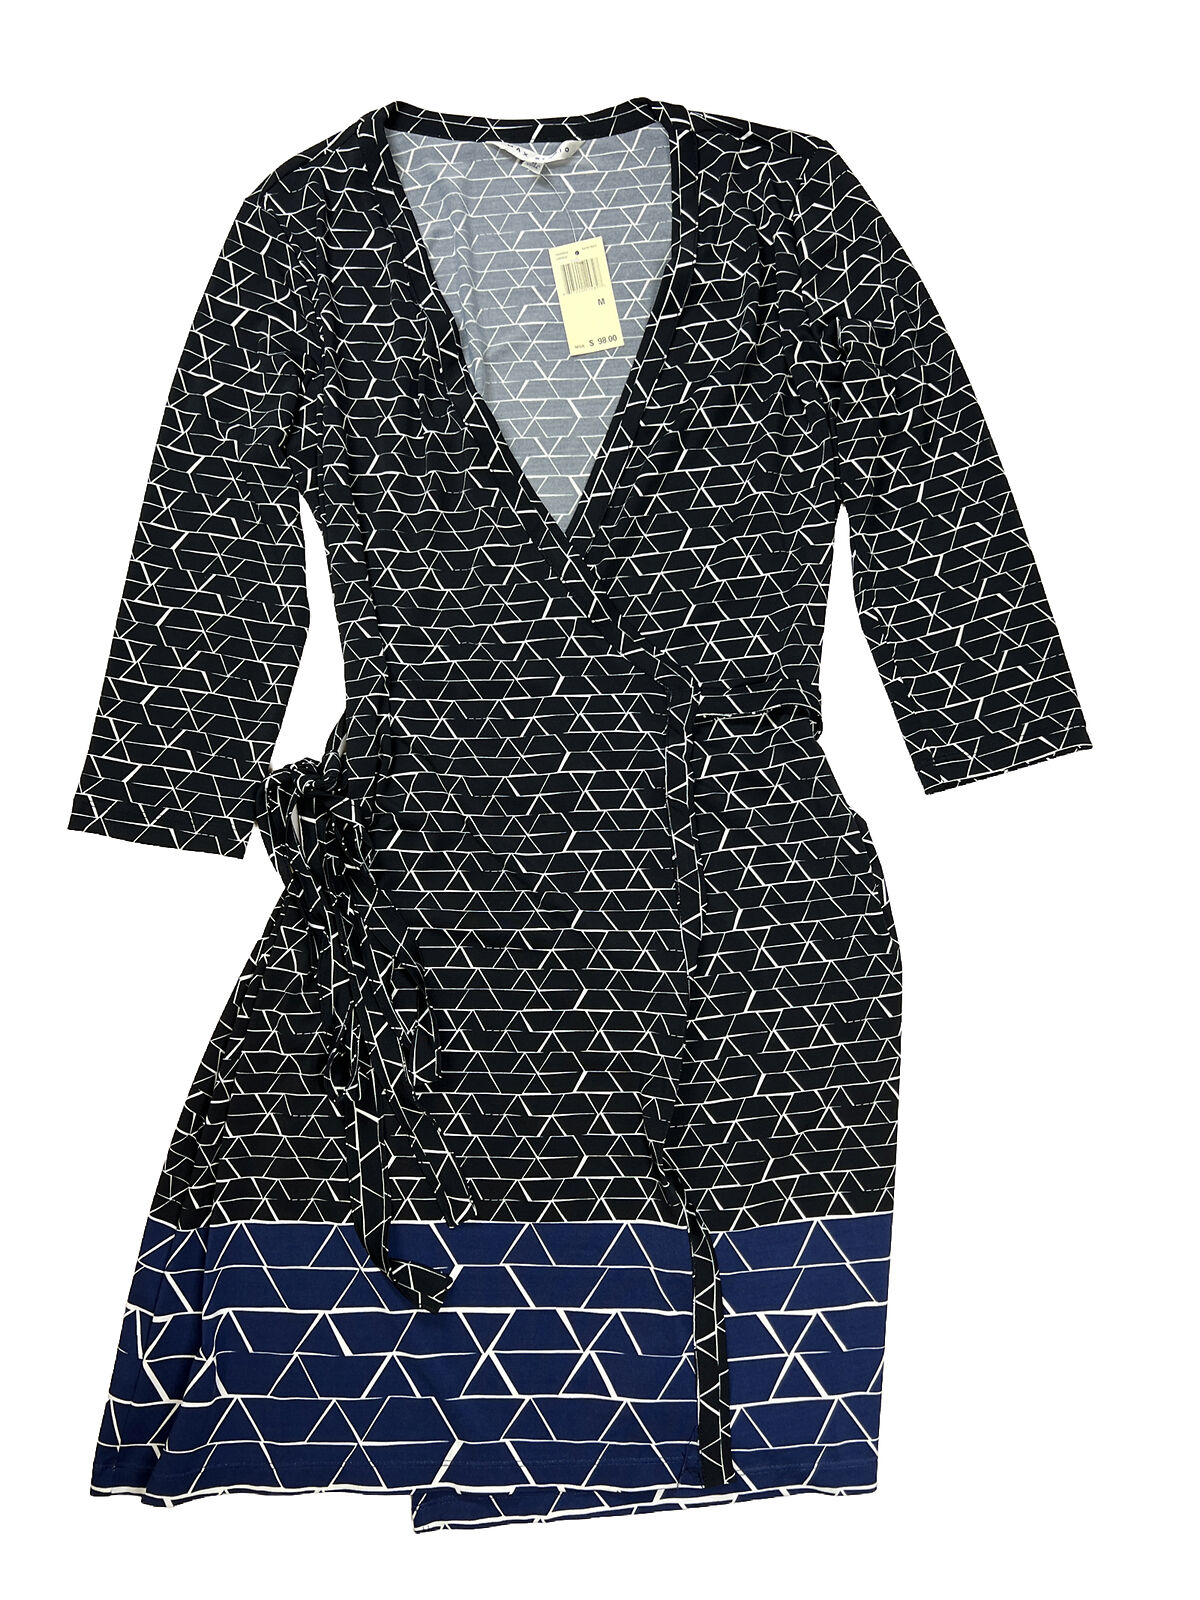 NEW Max Studio Women's Black Geometric Wrap Dress - M